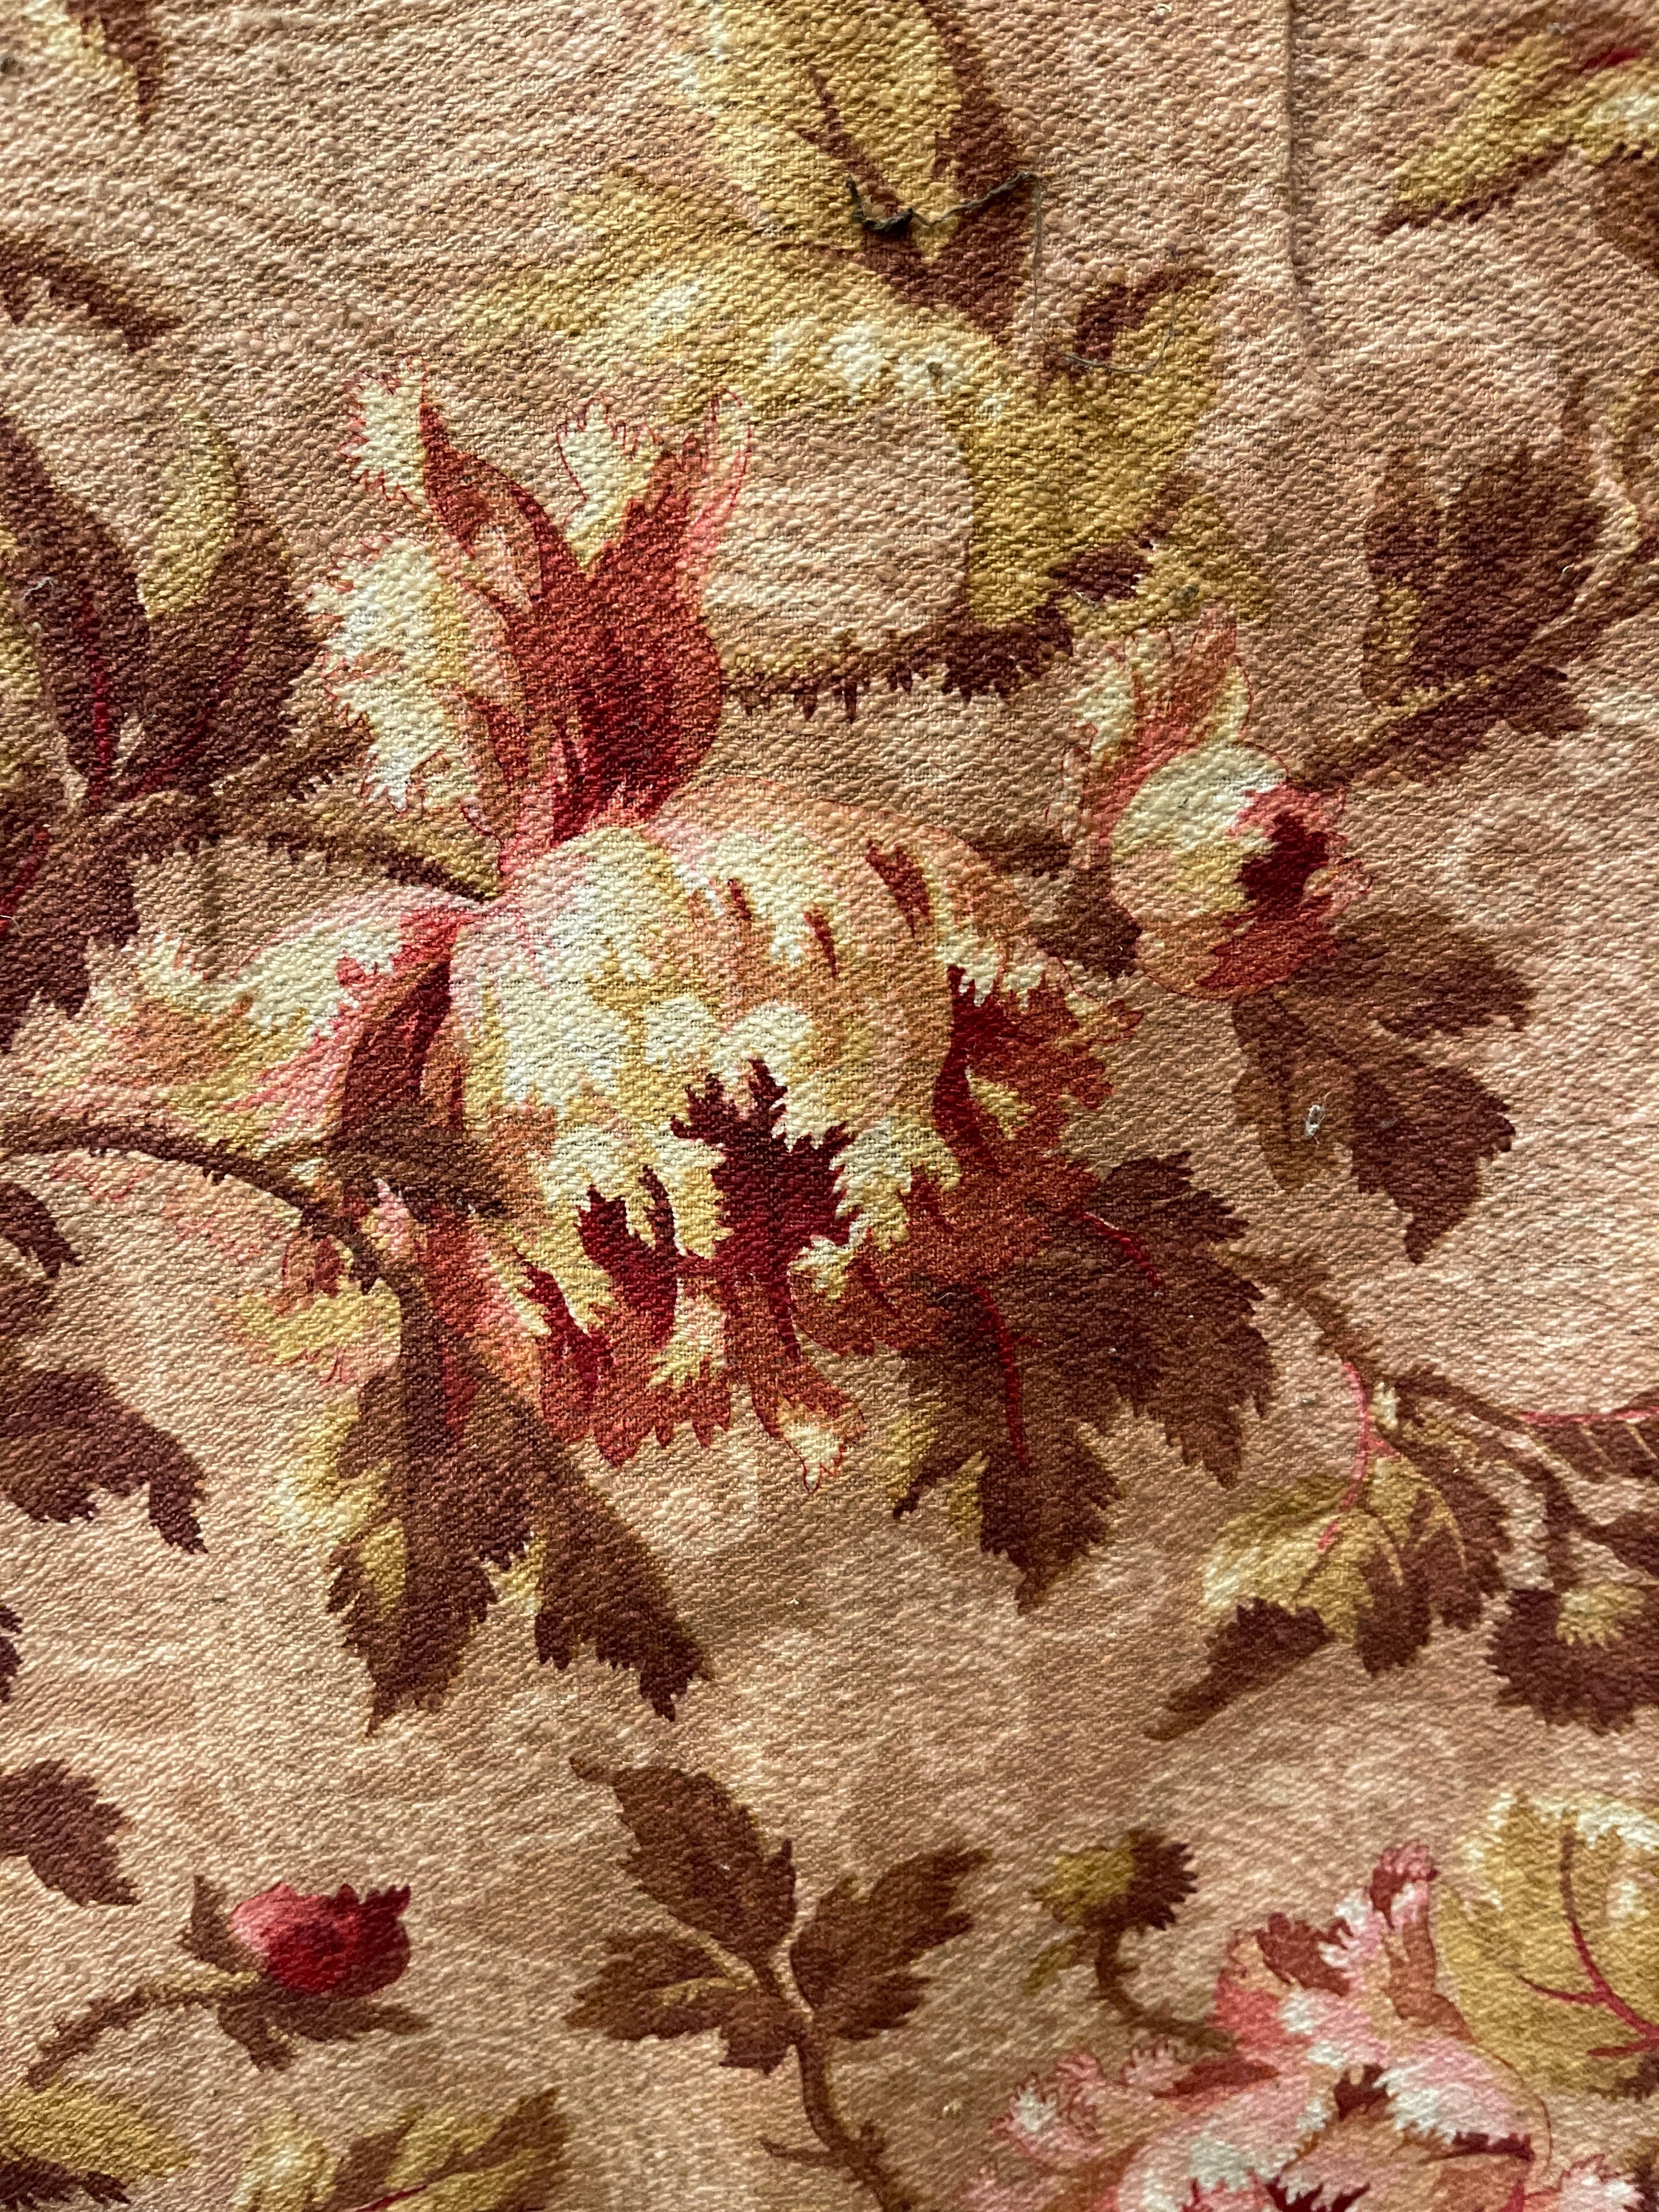 Antique 1800's French Textured Cretonne Cotton Weave